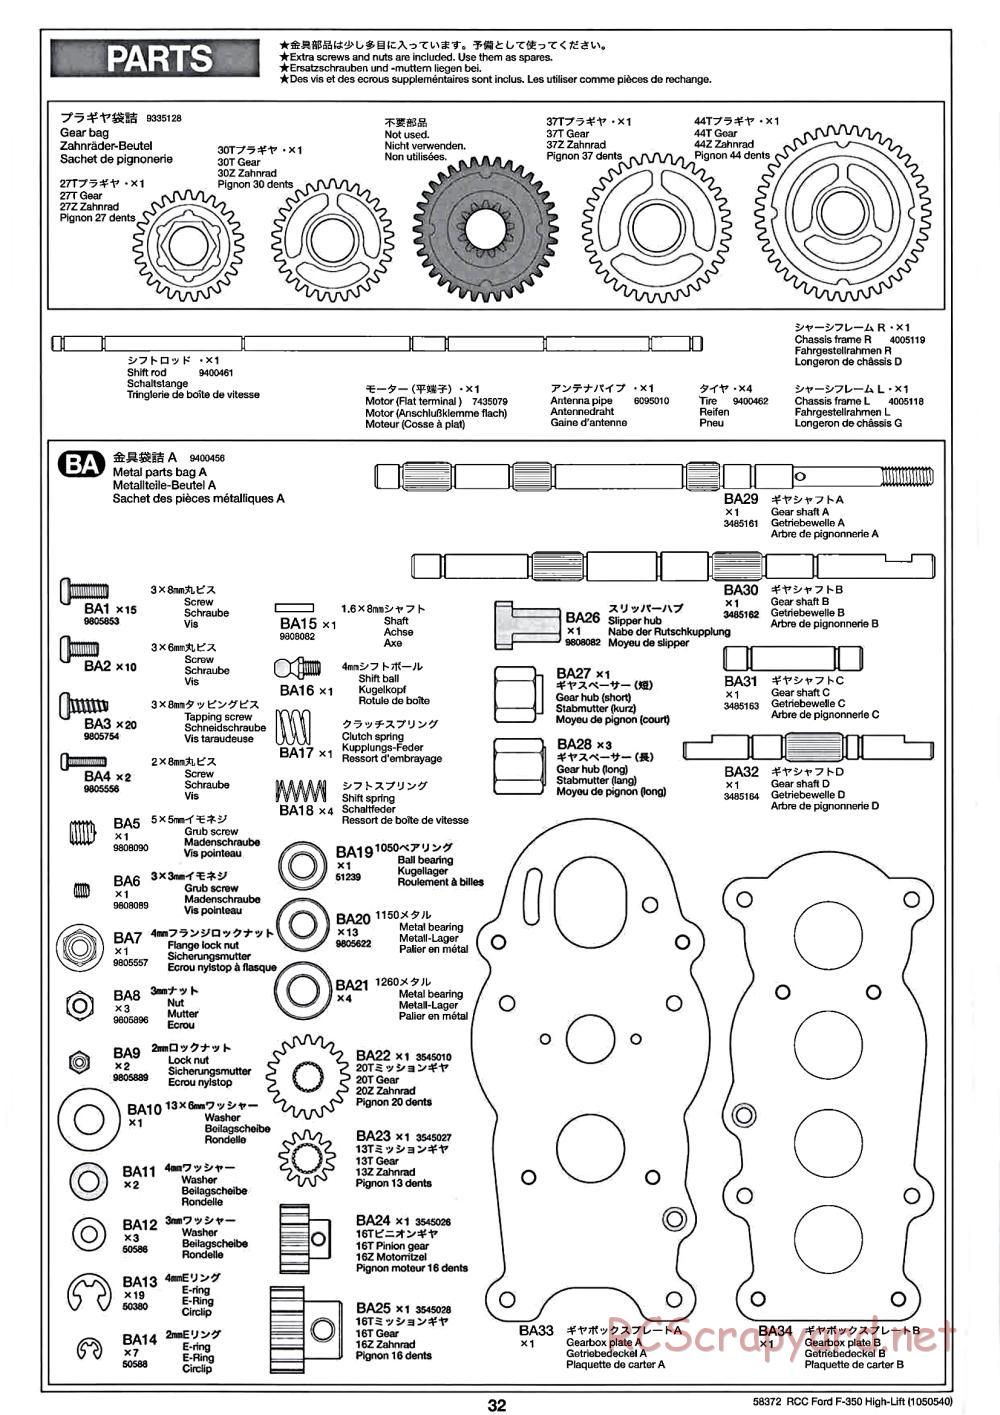 Tamiya - Ford F350 High-Lift Chassis - Manual - Page 32